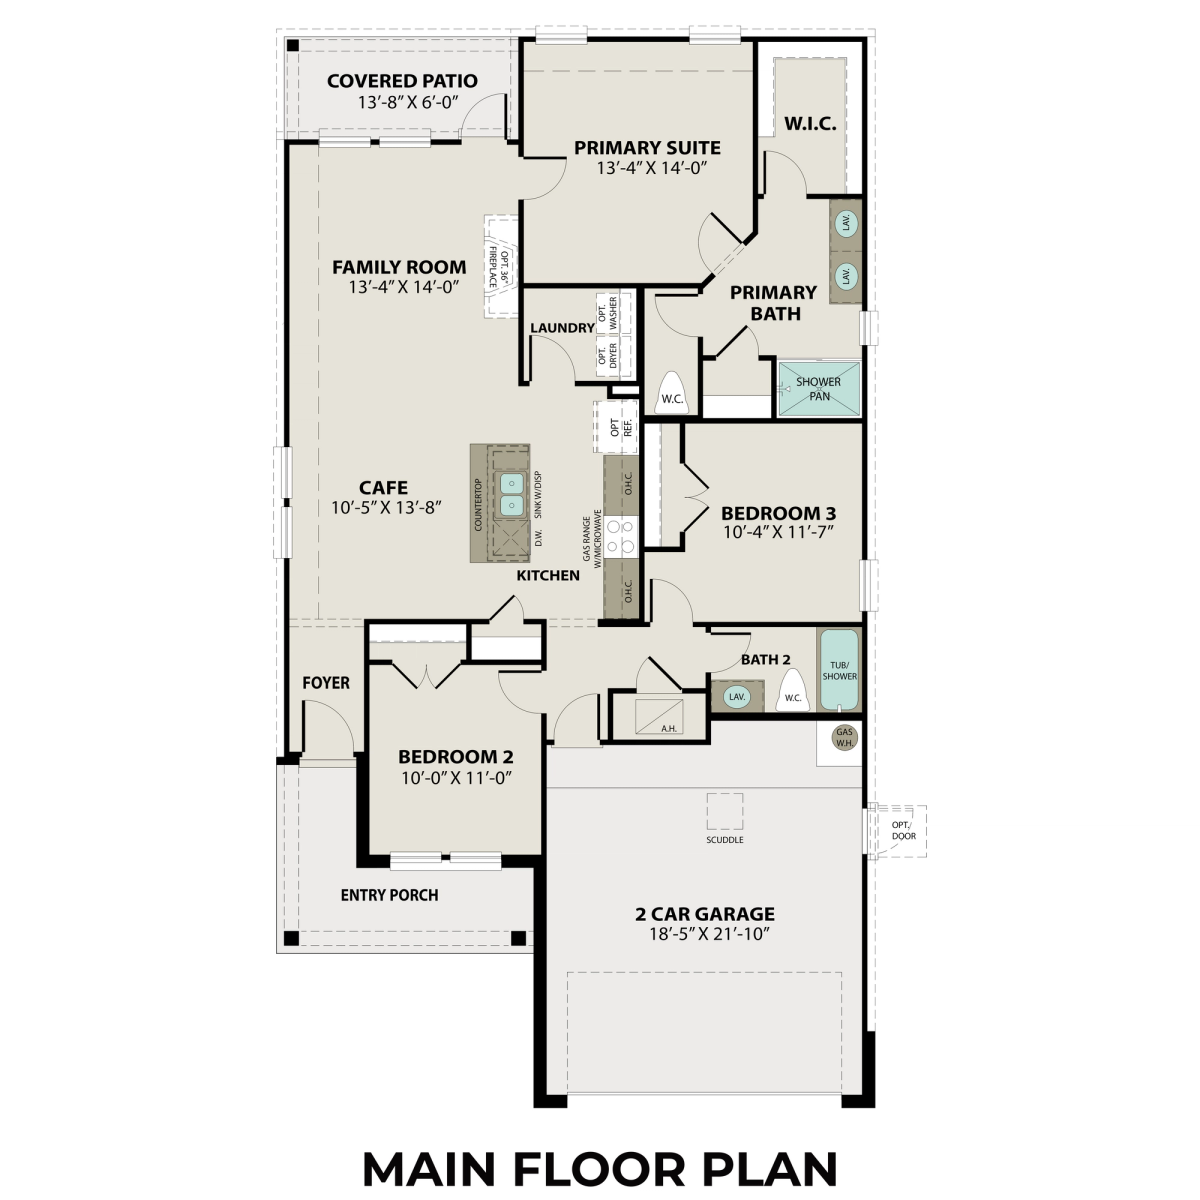 1 - The Costa C floor plan layout for 2549 Malibu Glen Drive in Davidson Homes' Sunterra community.